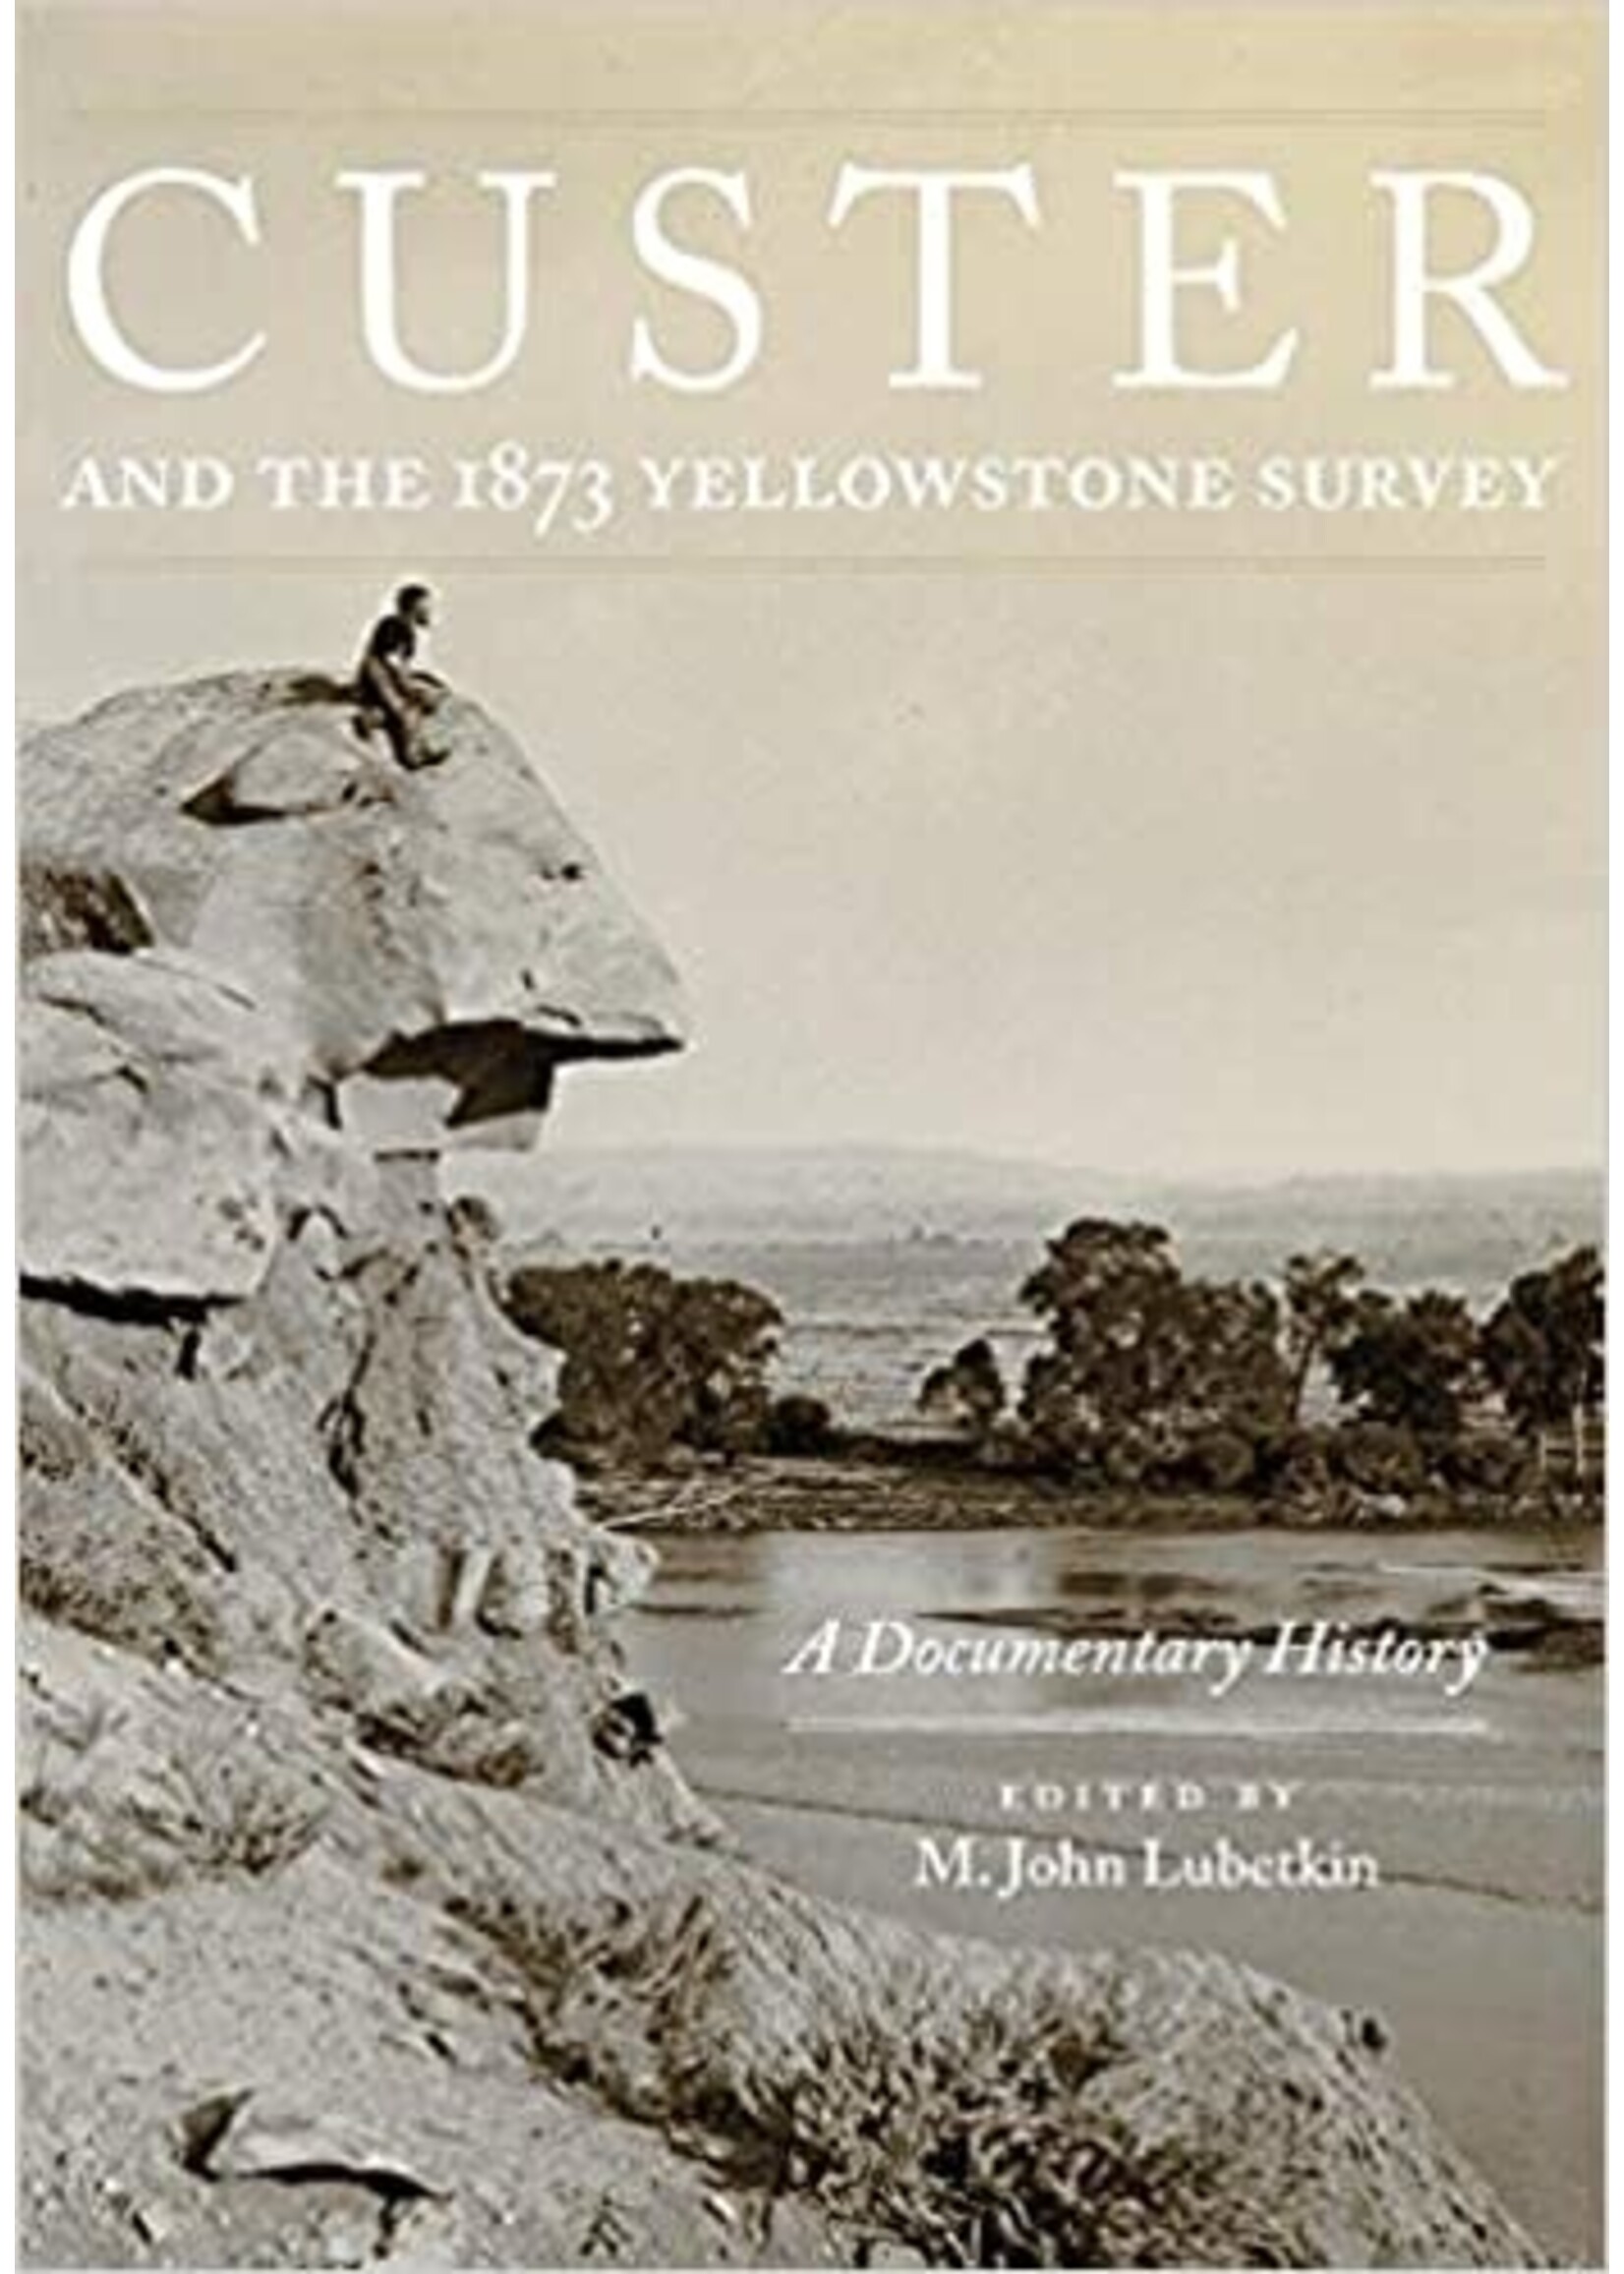 Custer 1873 Yellowstone Survey: A Documentary History